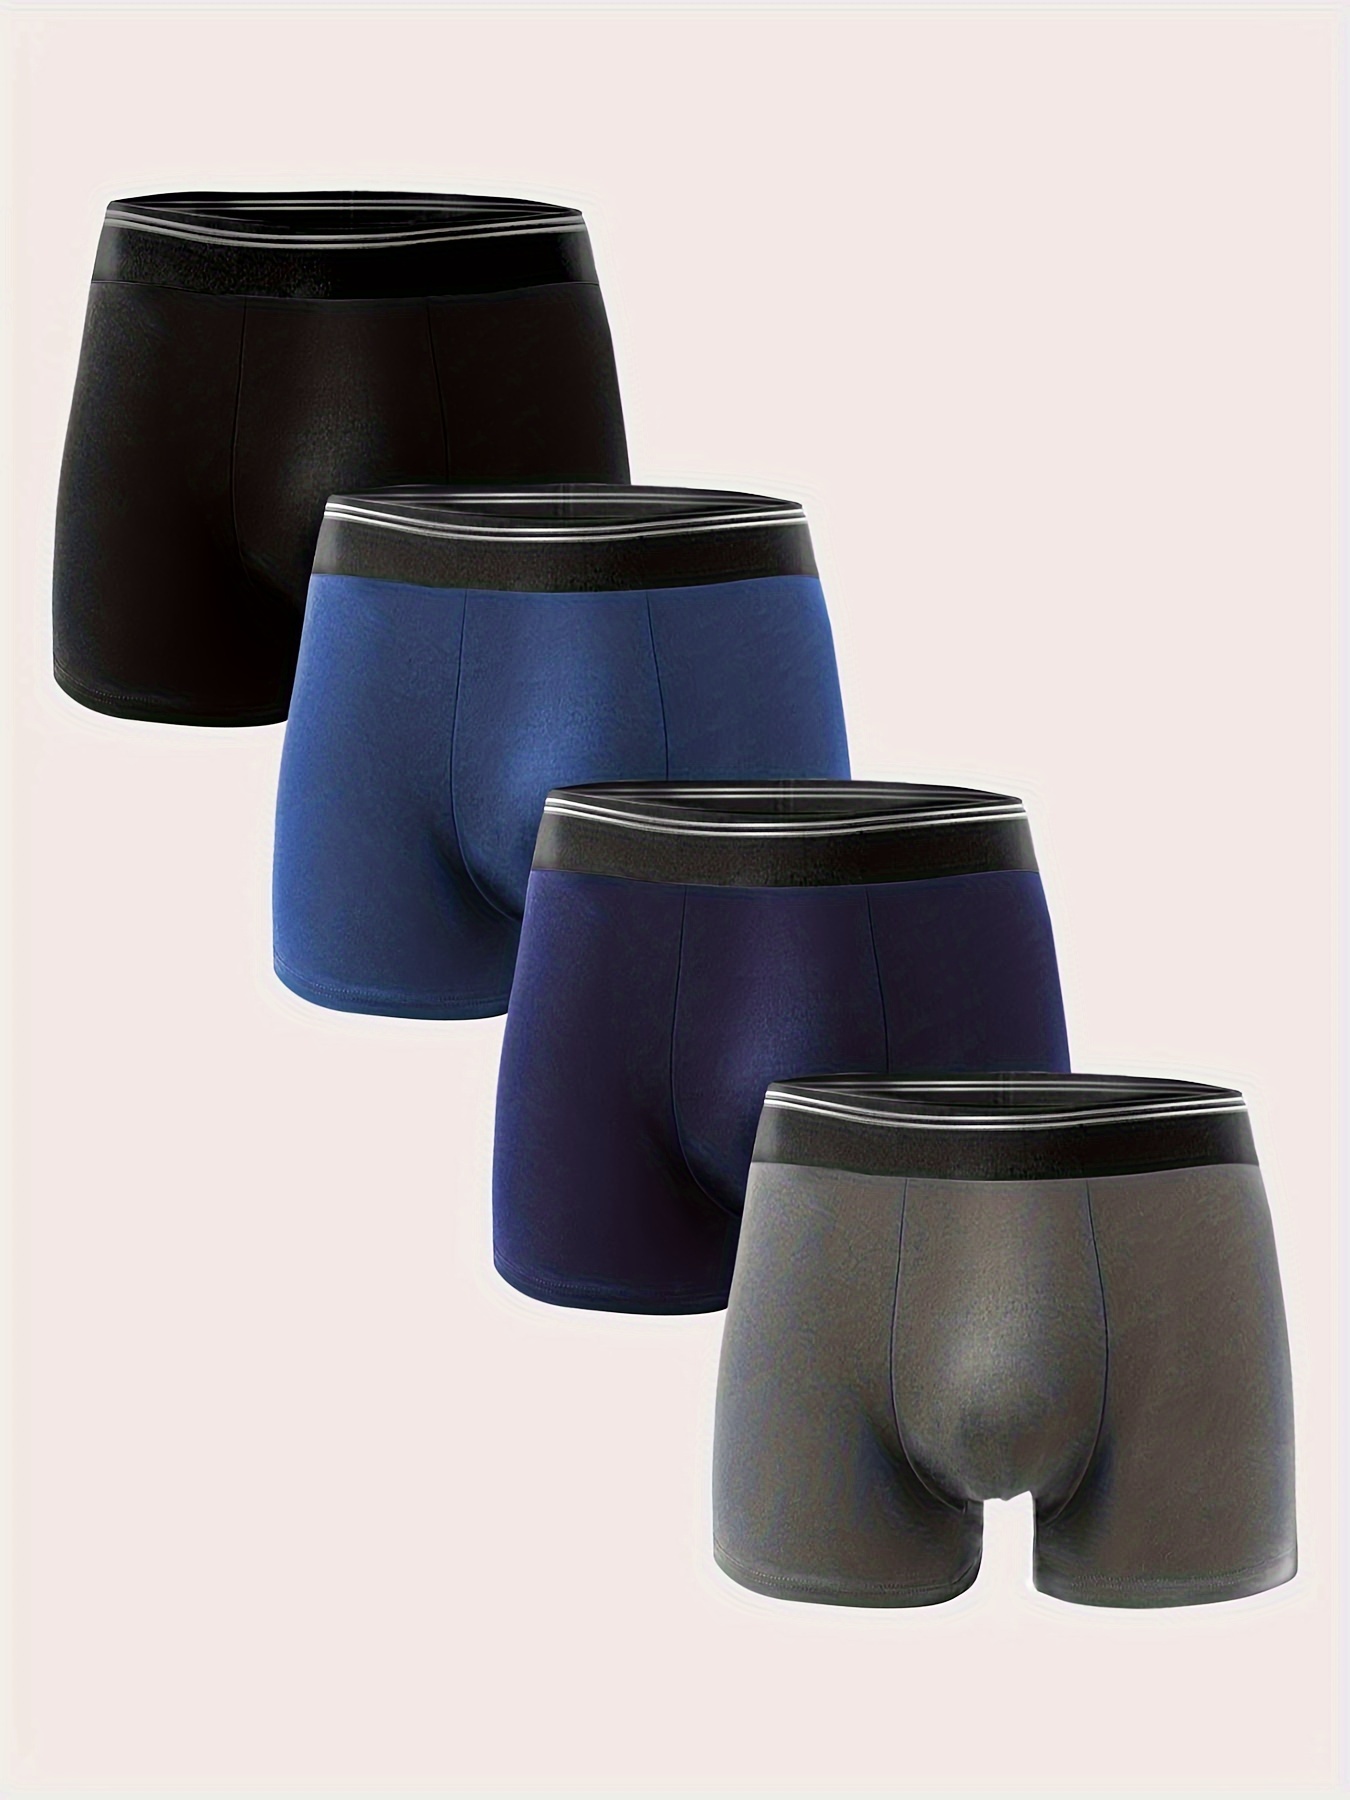 Printed Men Cotton Trunk Underwear, Length: Short, Type: Trunks at